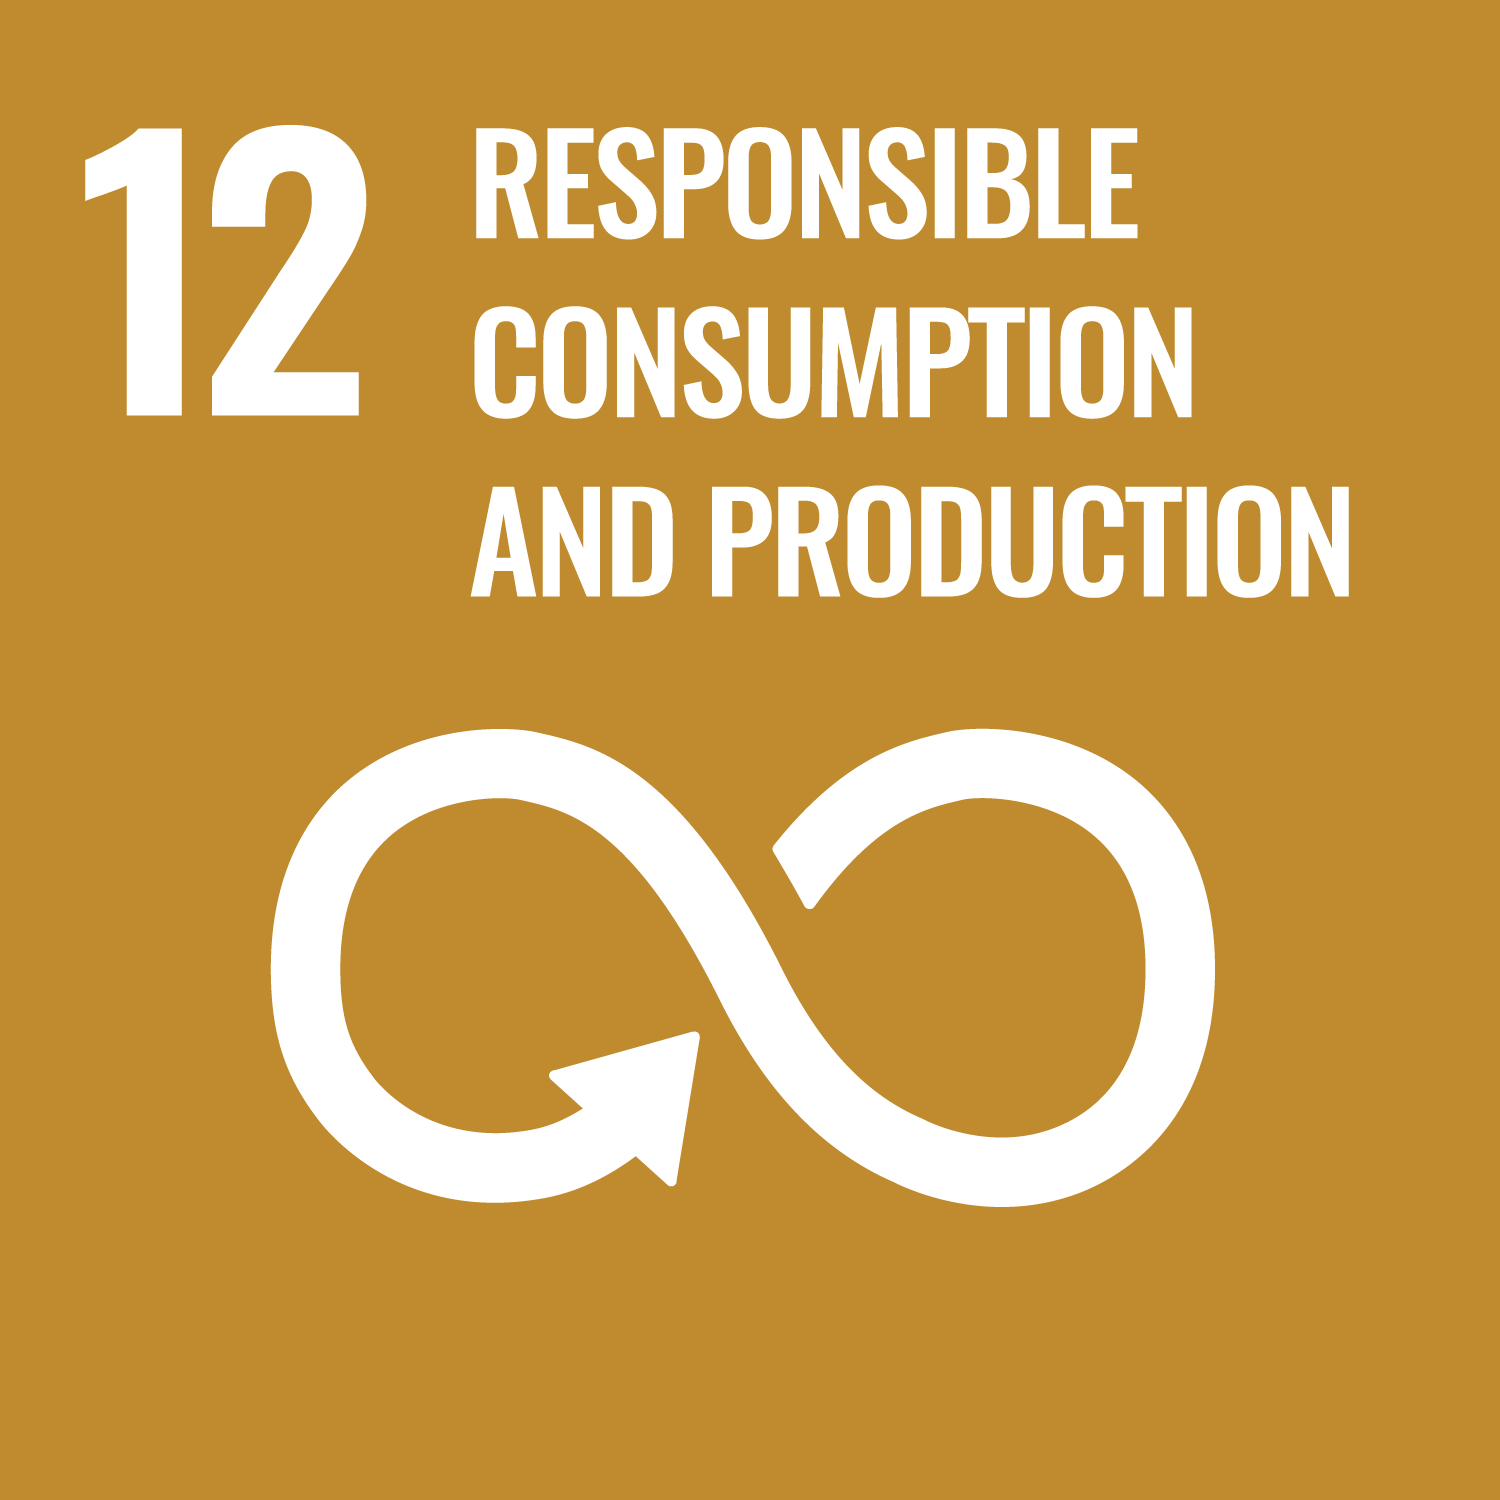 Responsible Consumption & Production